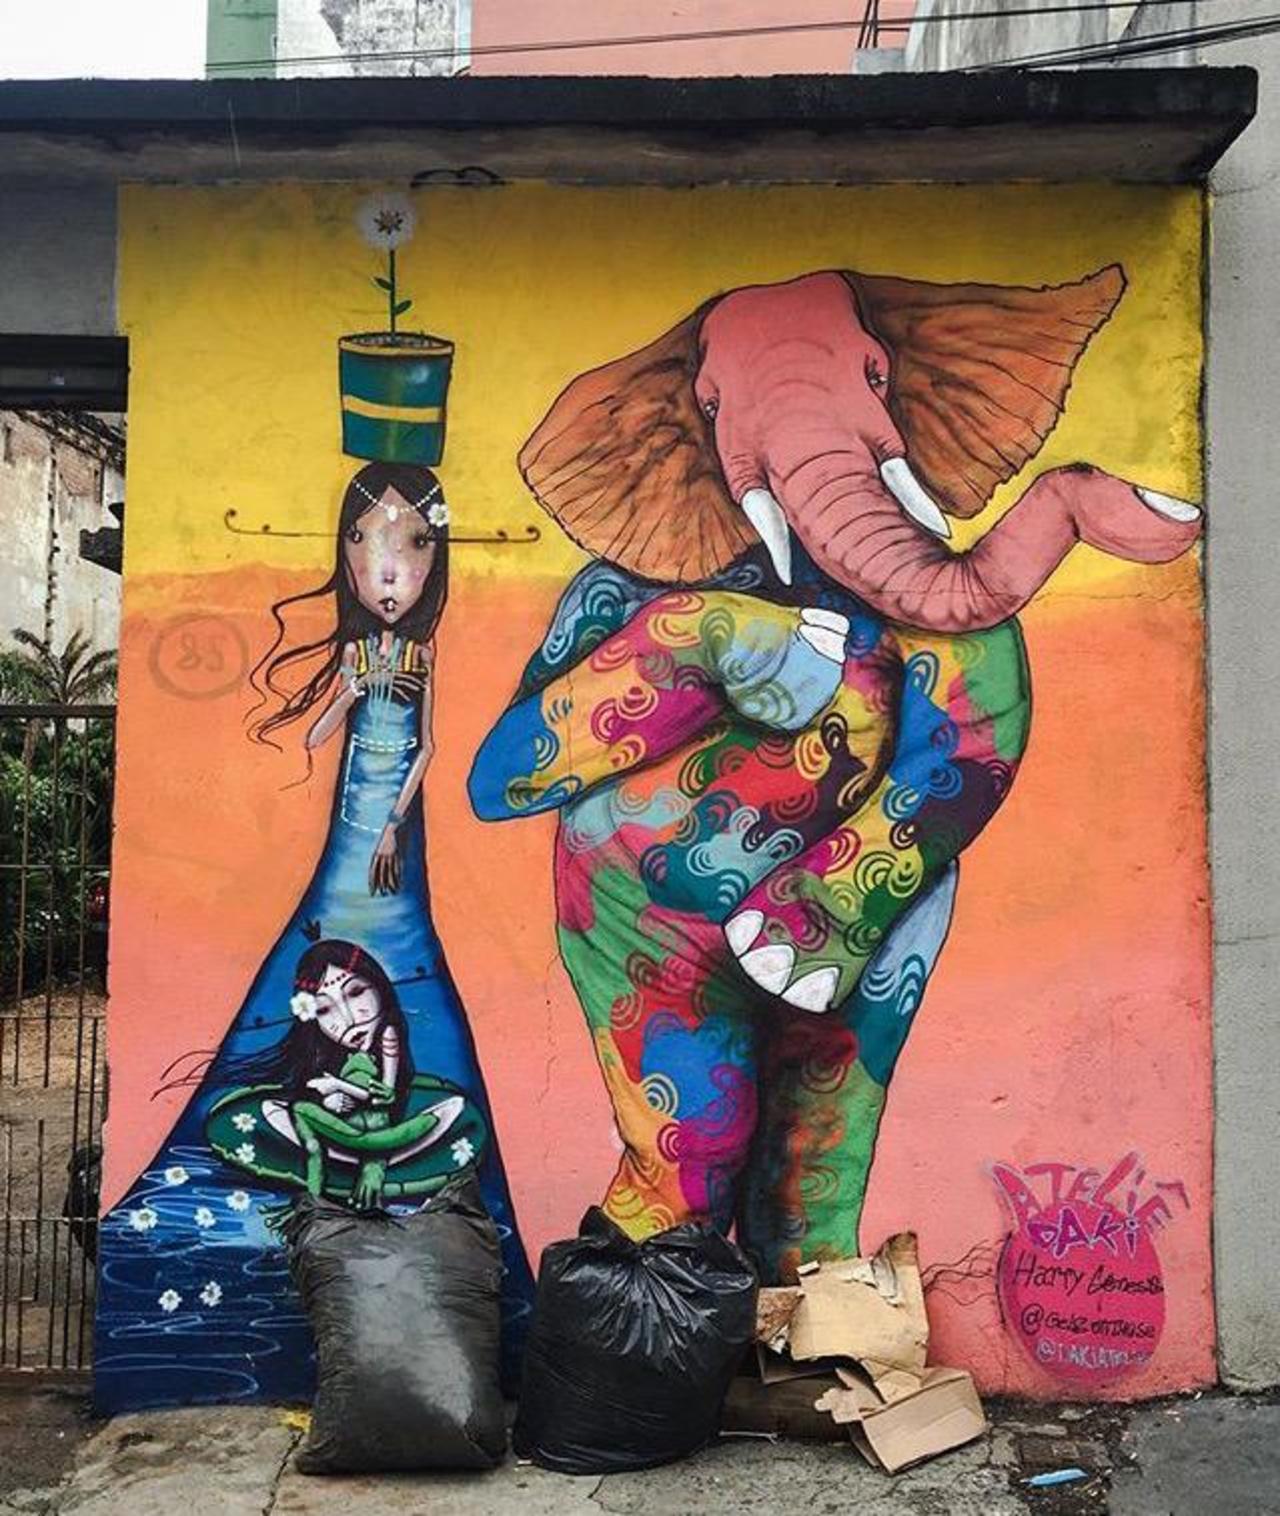 Street Art by Harry Geneis & Gelson in São Paulo #art #mural #graffiti #streetart http://t.co/SlLbhuMZfD … … … …… http://twitter.com/GoogleStreetArt/status/648016473831645184/photo/1/large?utm_source=fb&utm_medium=fb&utm_campaign=charlesjackso14&utm_content=648021496900808704